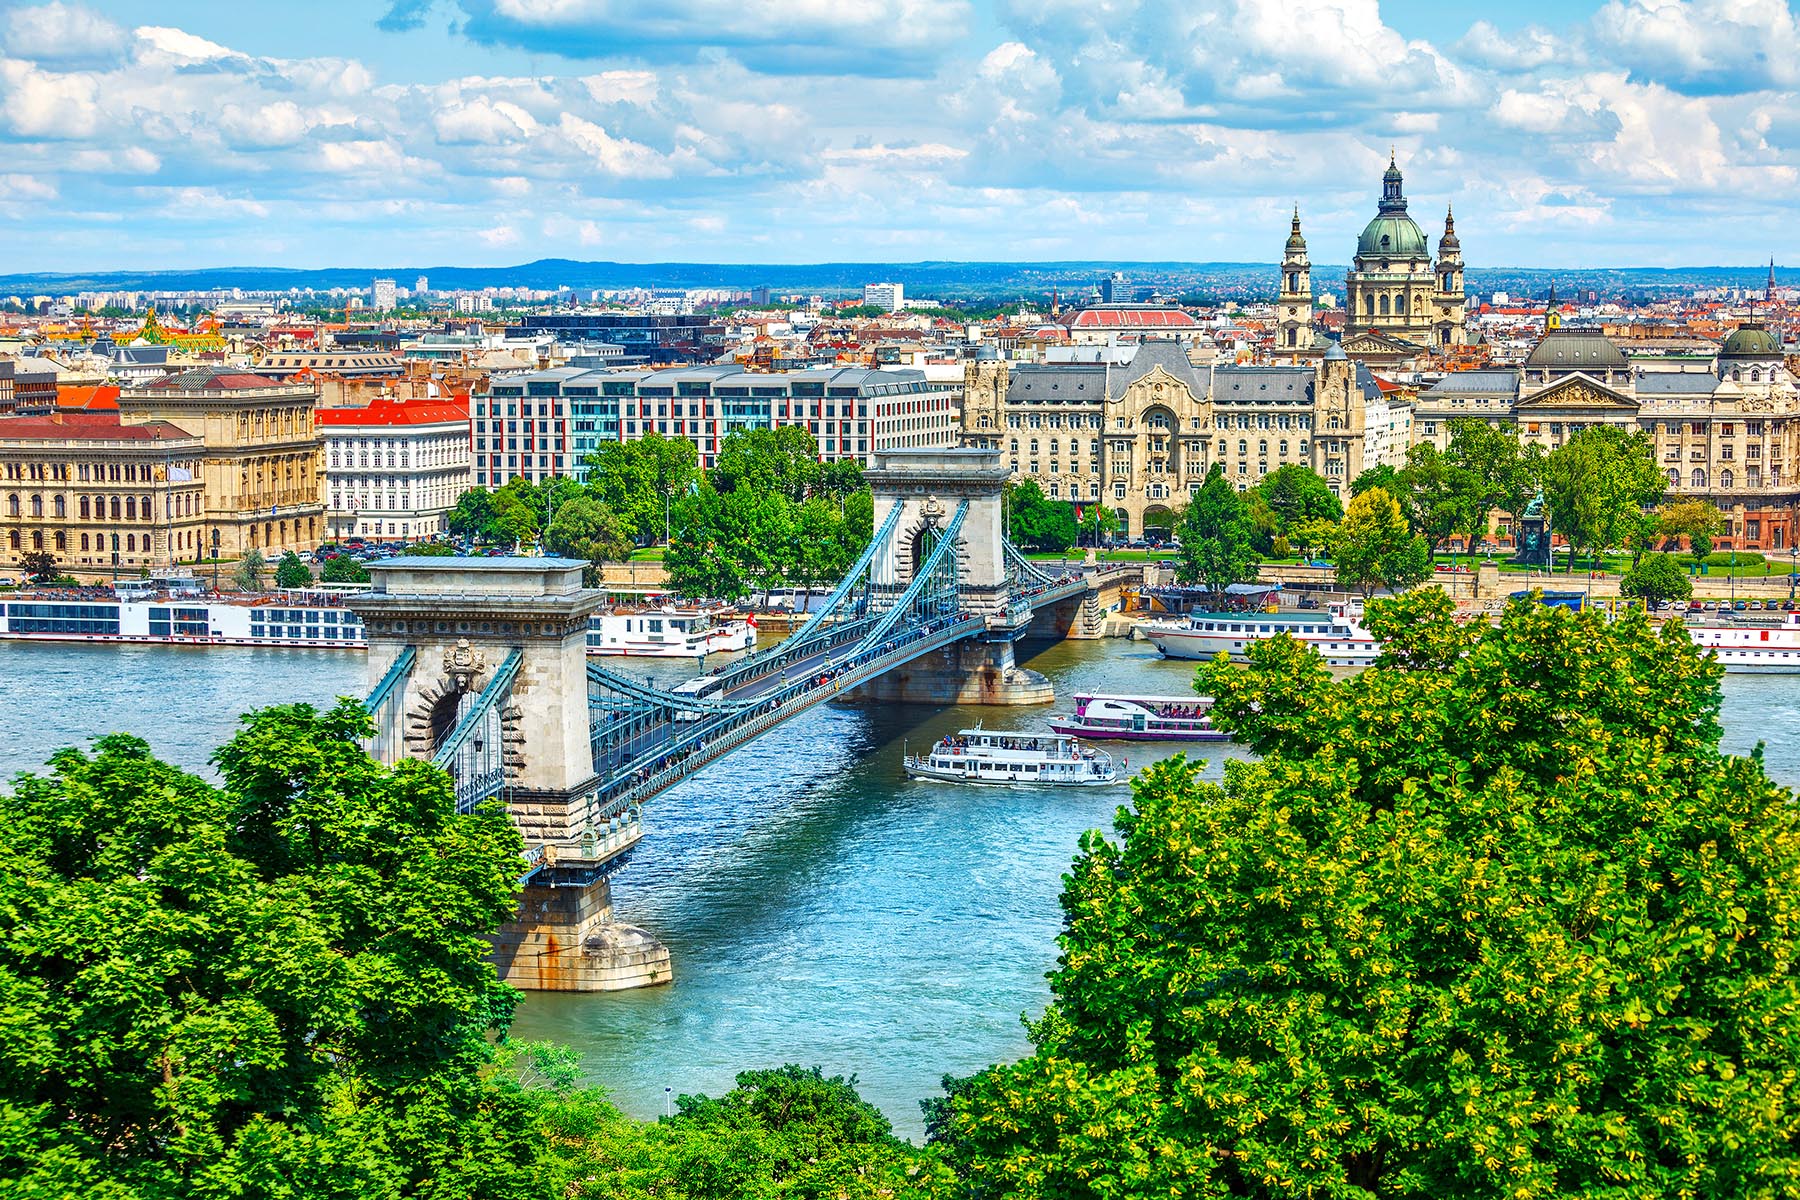 Chain bridge on Danube river in Budapest city, Hungary